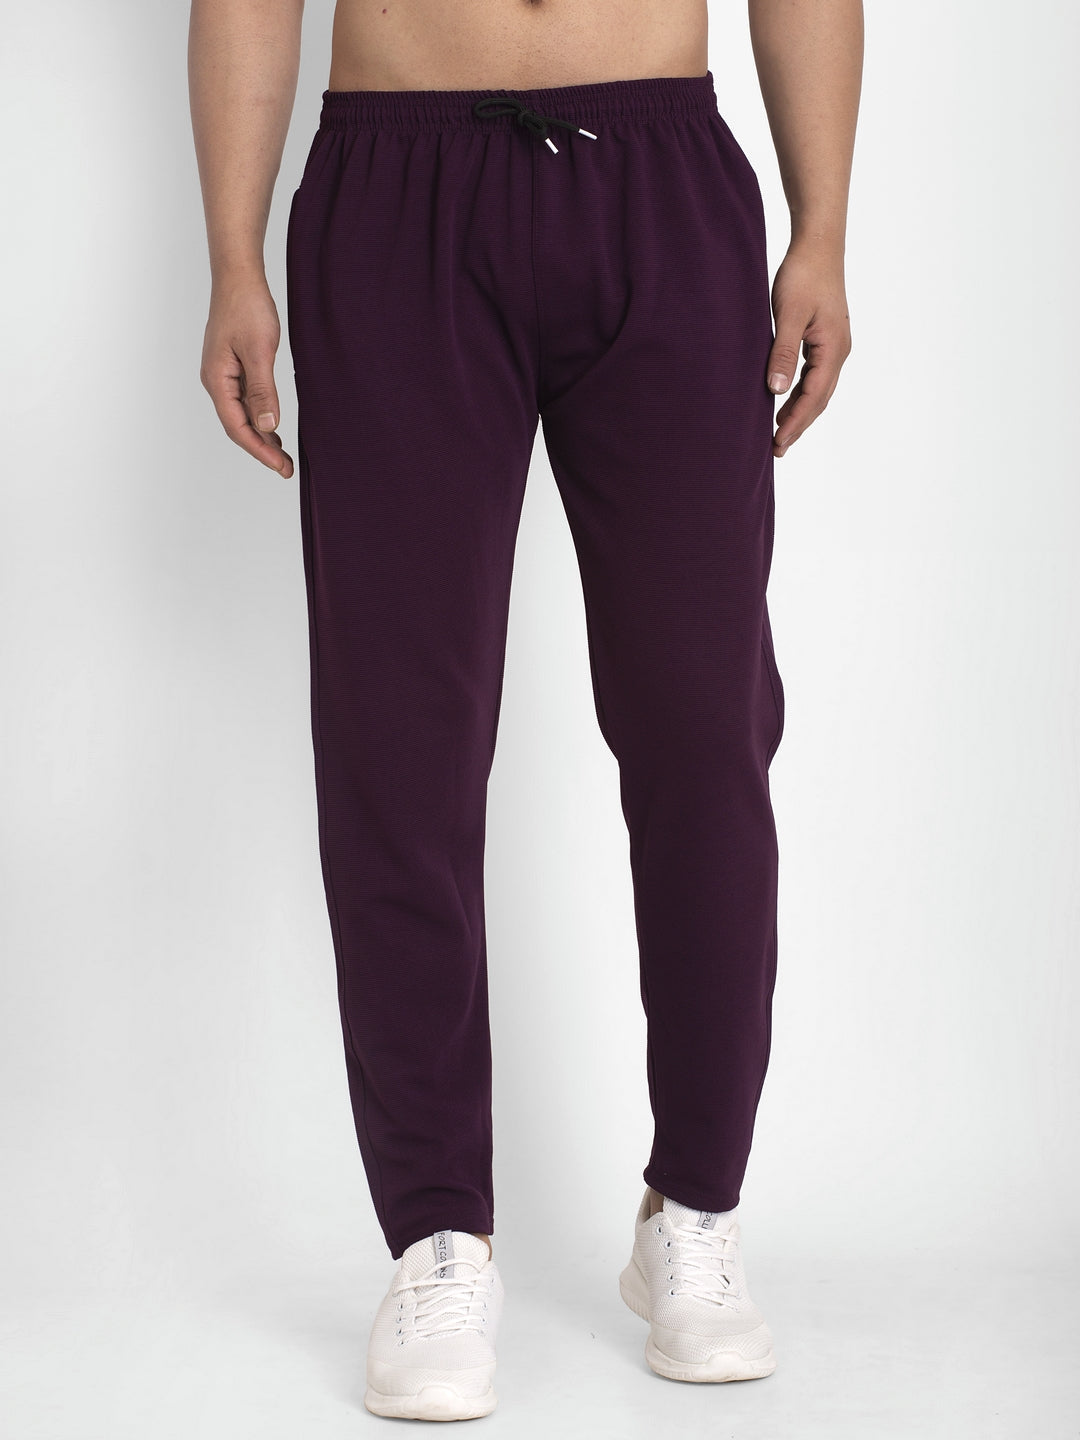 Men's Purple Solid Track Pants ( JOG 014Purple ) - Jainish